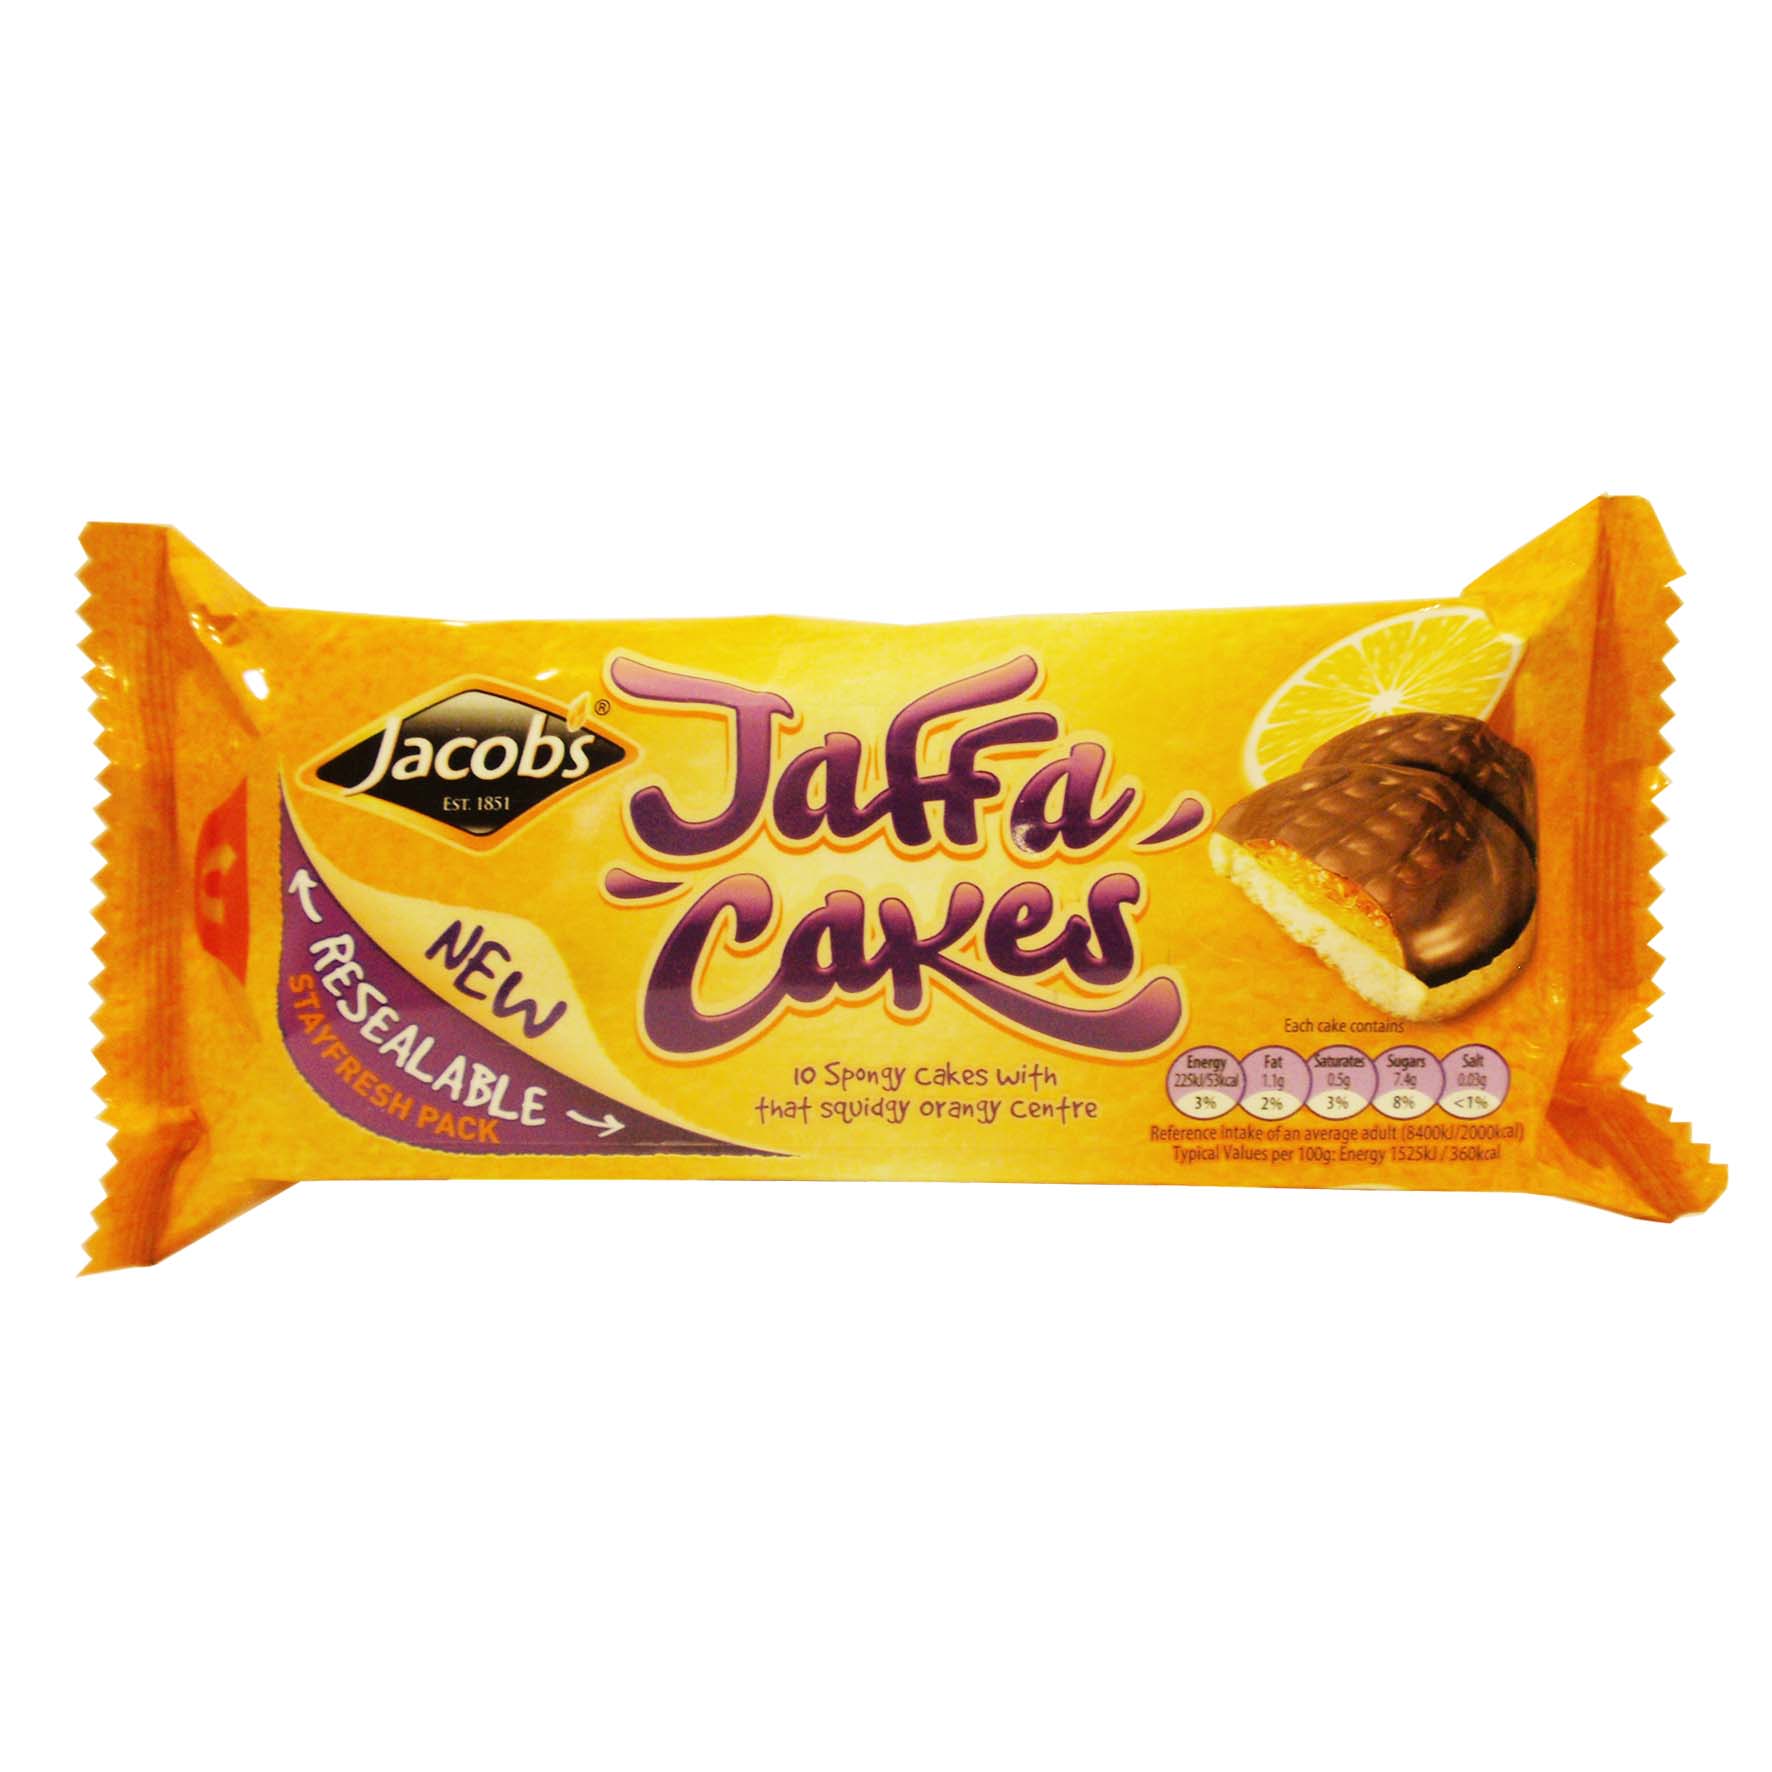 Jacobs galletas jaffa cakes chocol. resel.